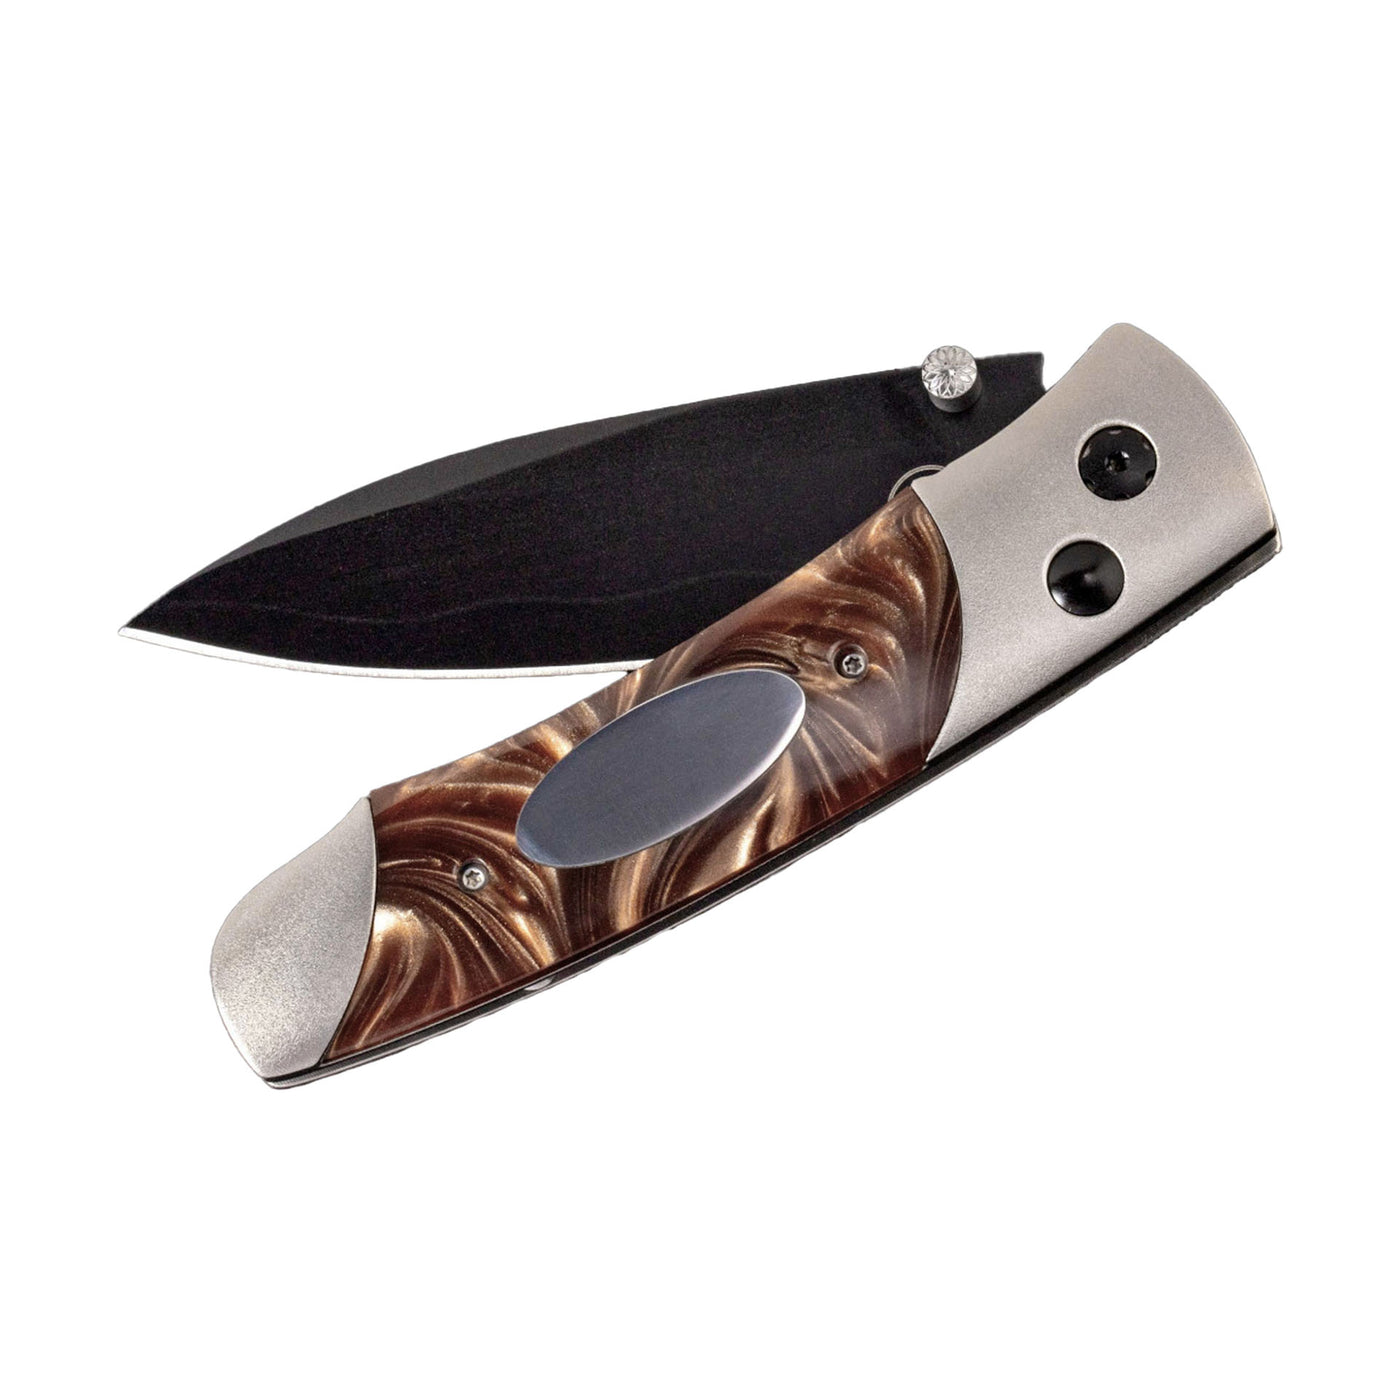 A200-3B' Pocket Knife Brown with kirinite handle